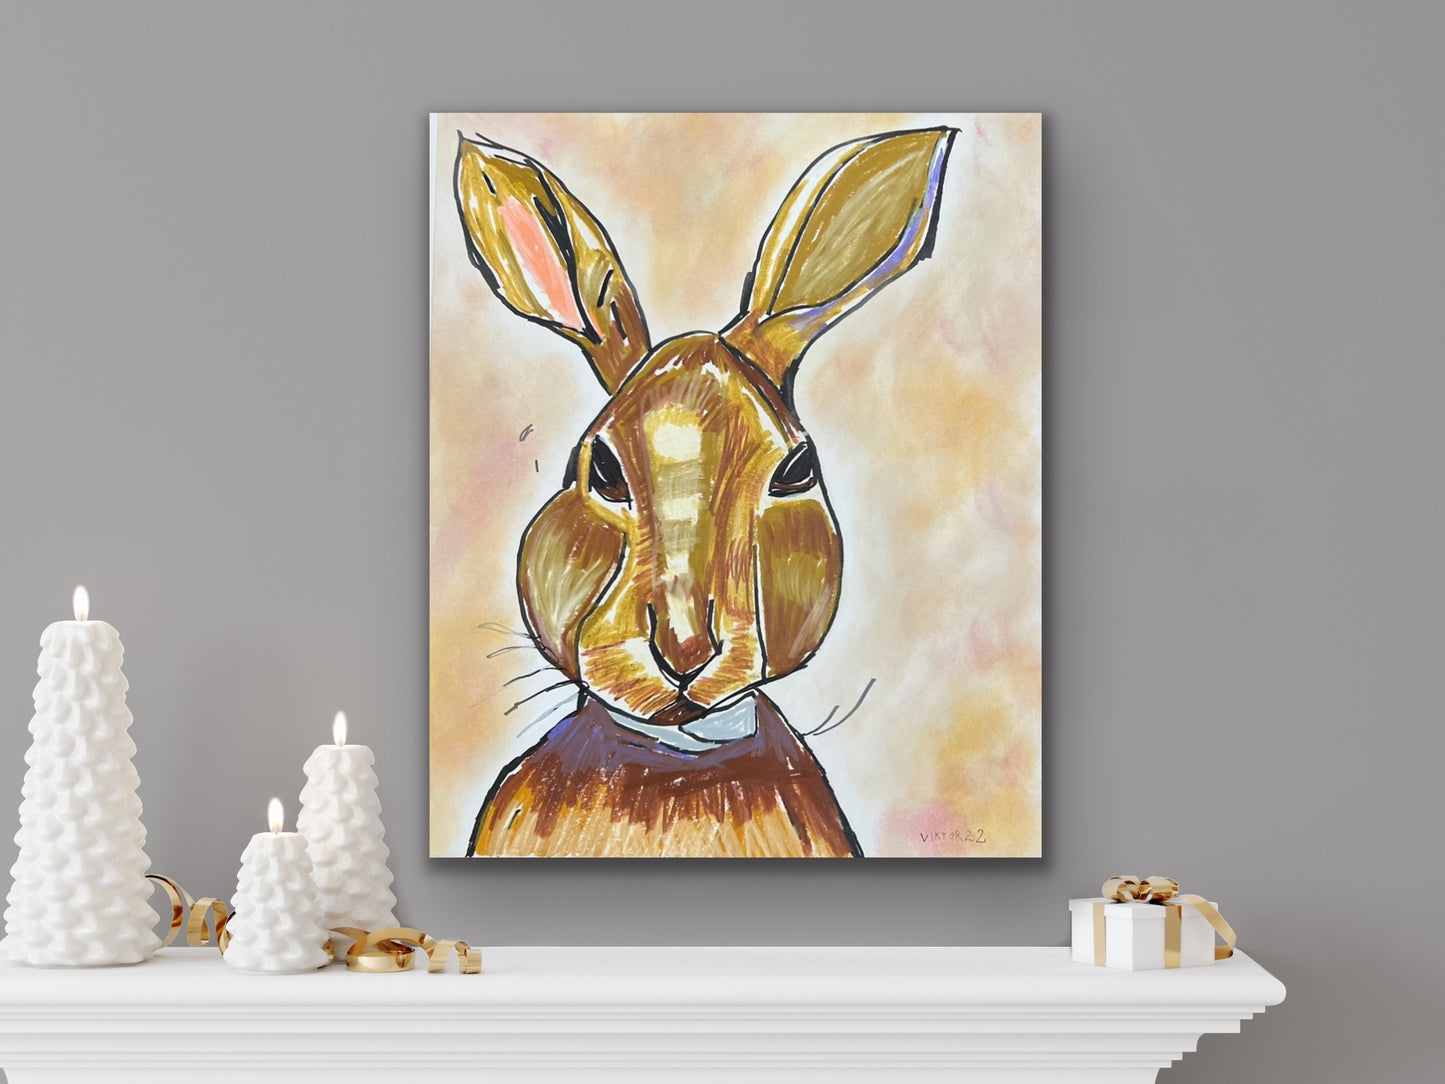 The Brown Rabbit - fine prints of original artwork